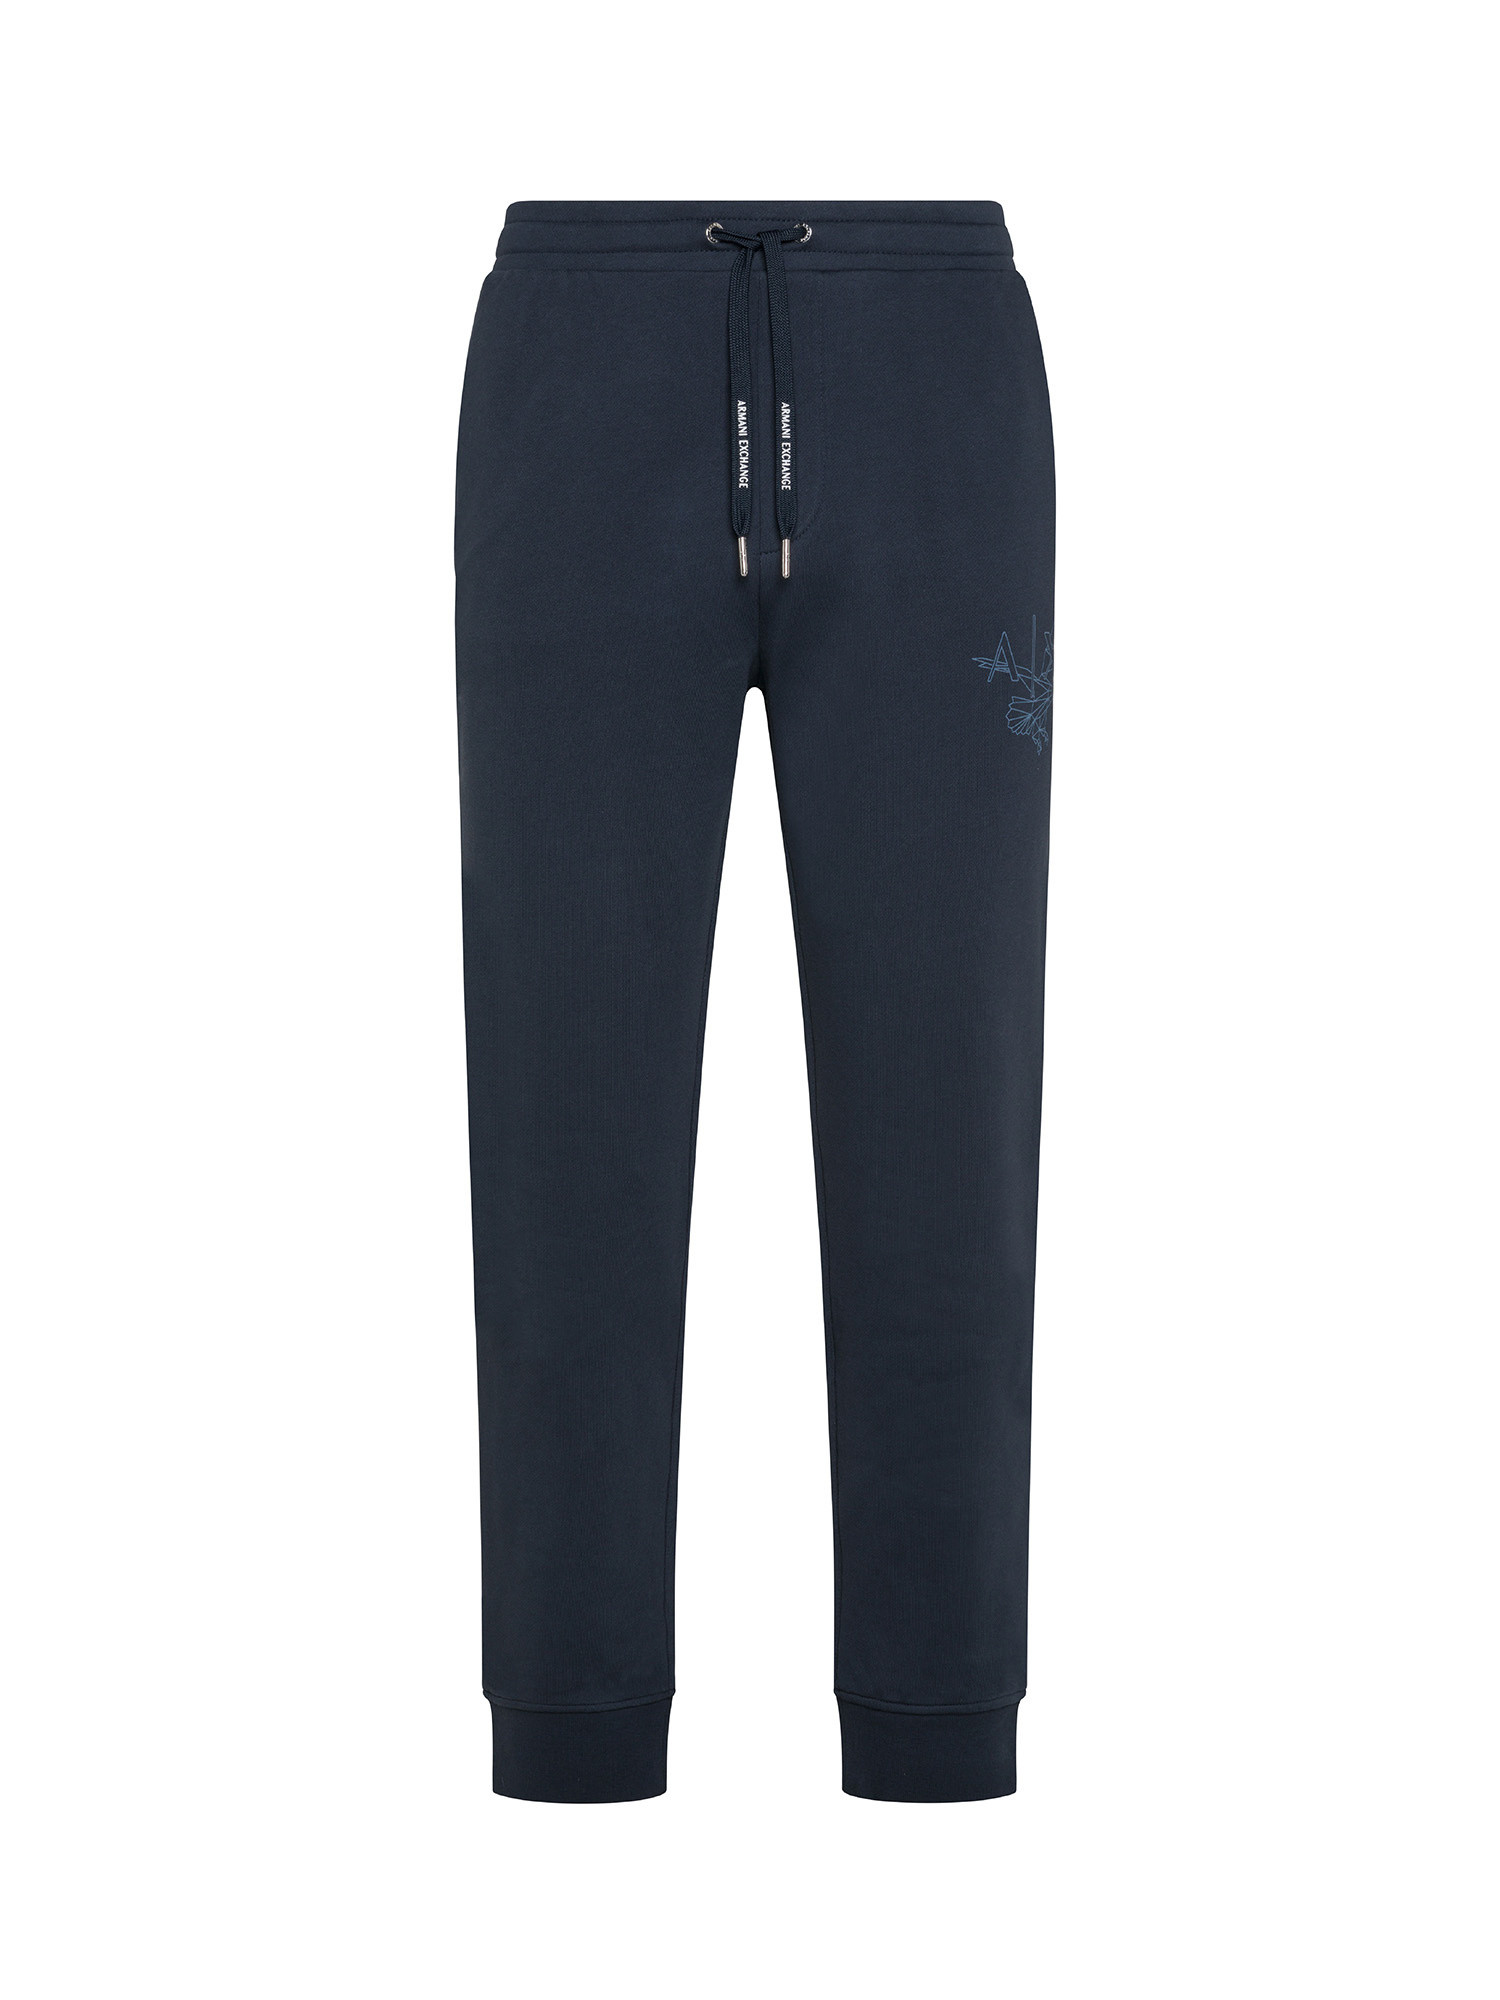 Armani Exchange - Pantaloni sportivi in cotone biologico, Blu scuro, large image number 0